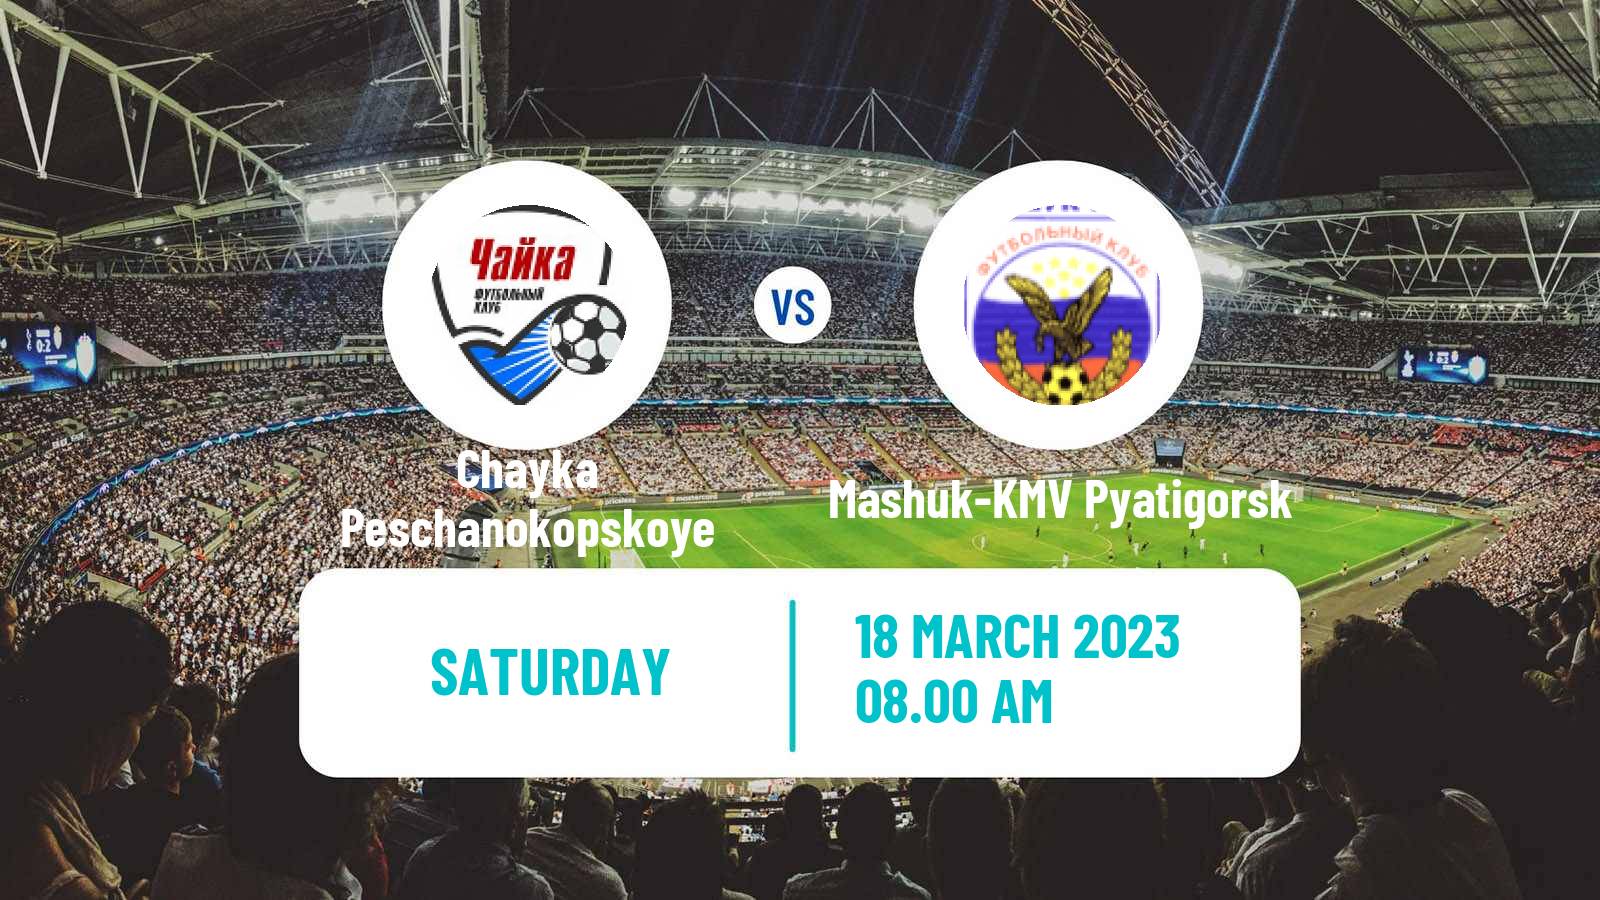 Soccer Russian FNL 2 Group 1 Chayka Peschanokopskoye - Mashuk-KMV Pyatigorsk